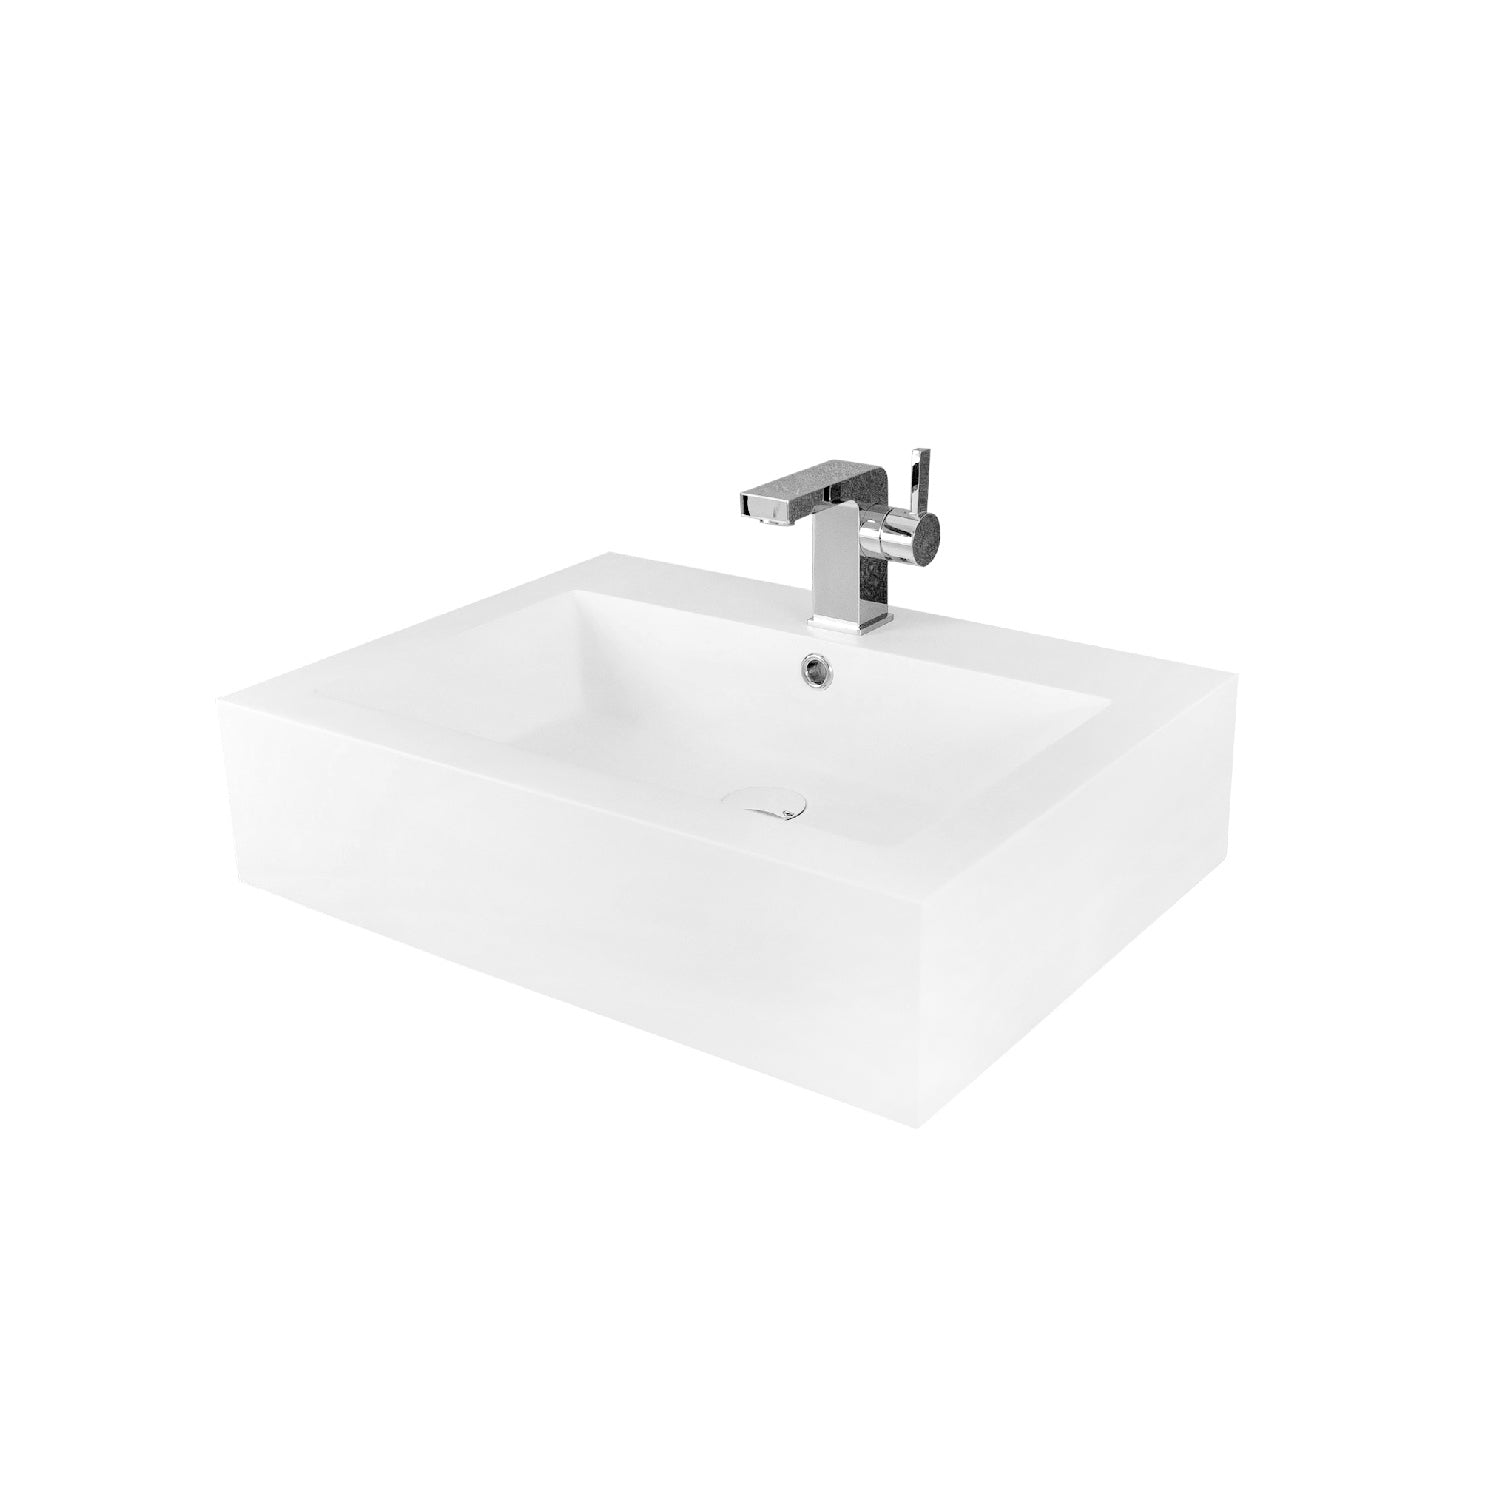 DAX Lavabo rectangular de superficie sólida para baño, acabado mate blanco, 24 x 18-1/8 x 6 pulgadas (DAX-AB-032)